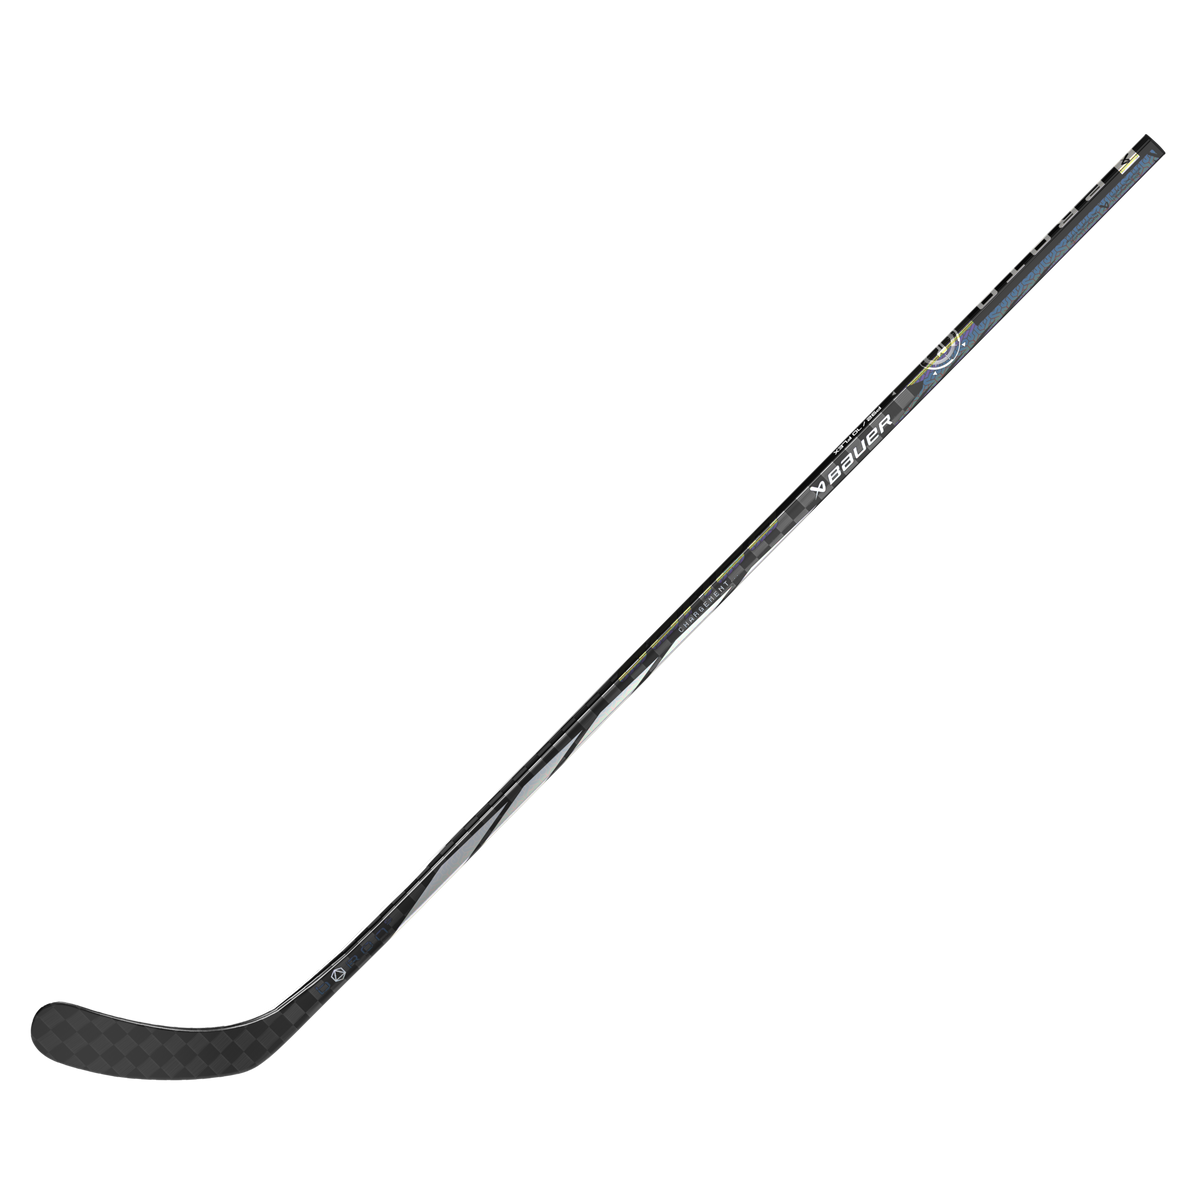 2022 Bauer Mystery Mini VAPOR HYPERLITE Hockey Stick - RIGHT Hand - RARE